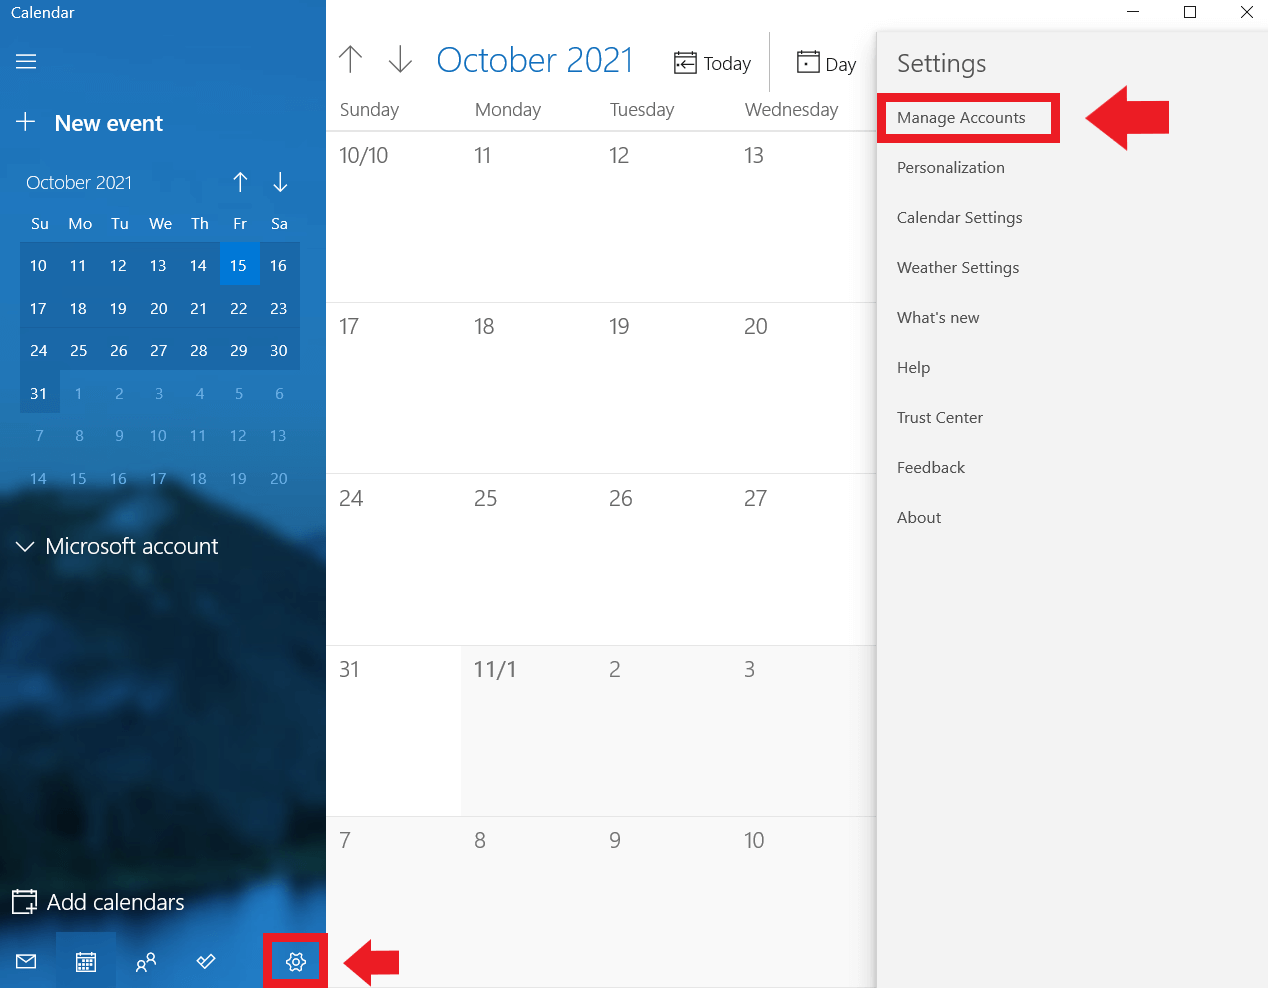 Calendario de Windows: “Configuración”, “Administrar cuentas”